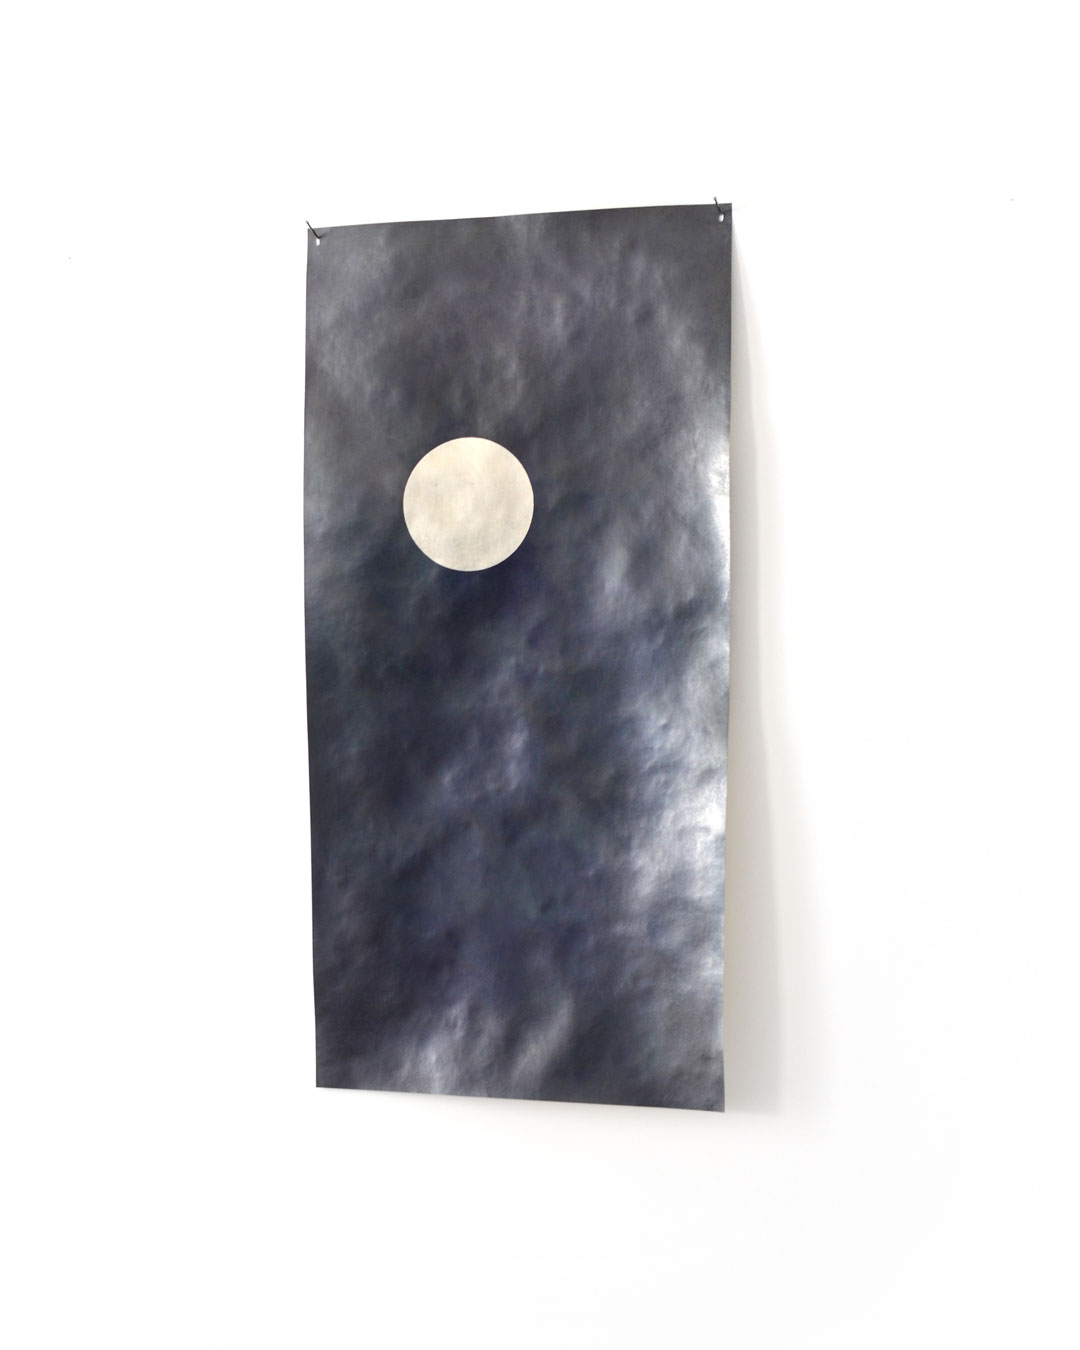 David Huycke, New Moon, 2019, wandobject; zilver, 1000 x 500 x 0,3 mm, €8500